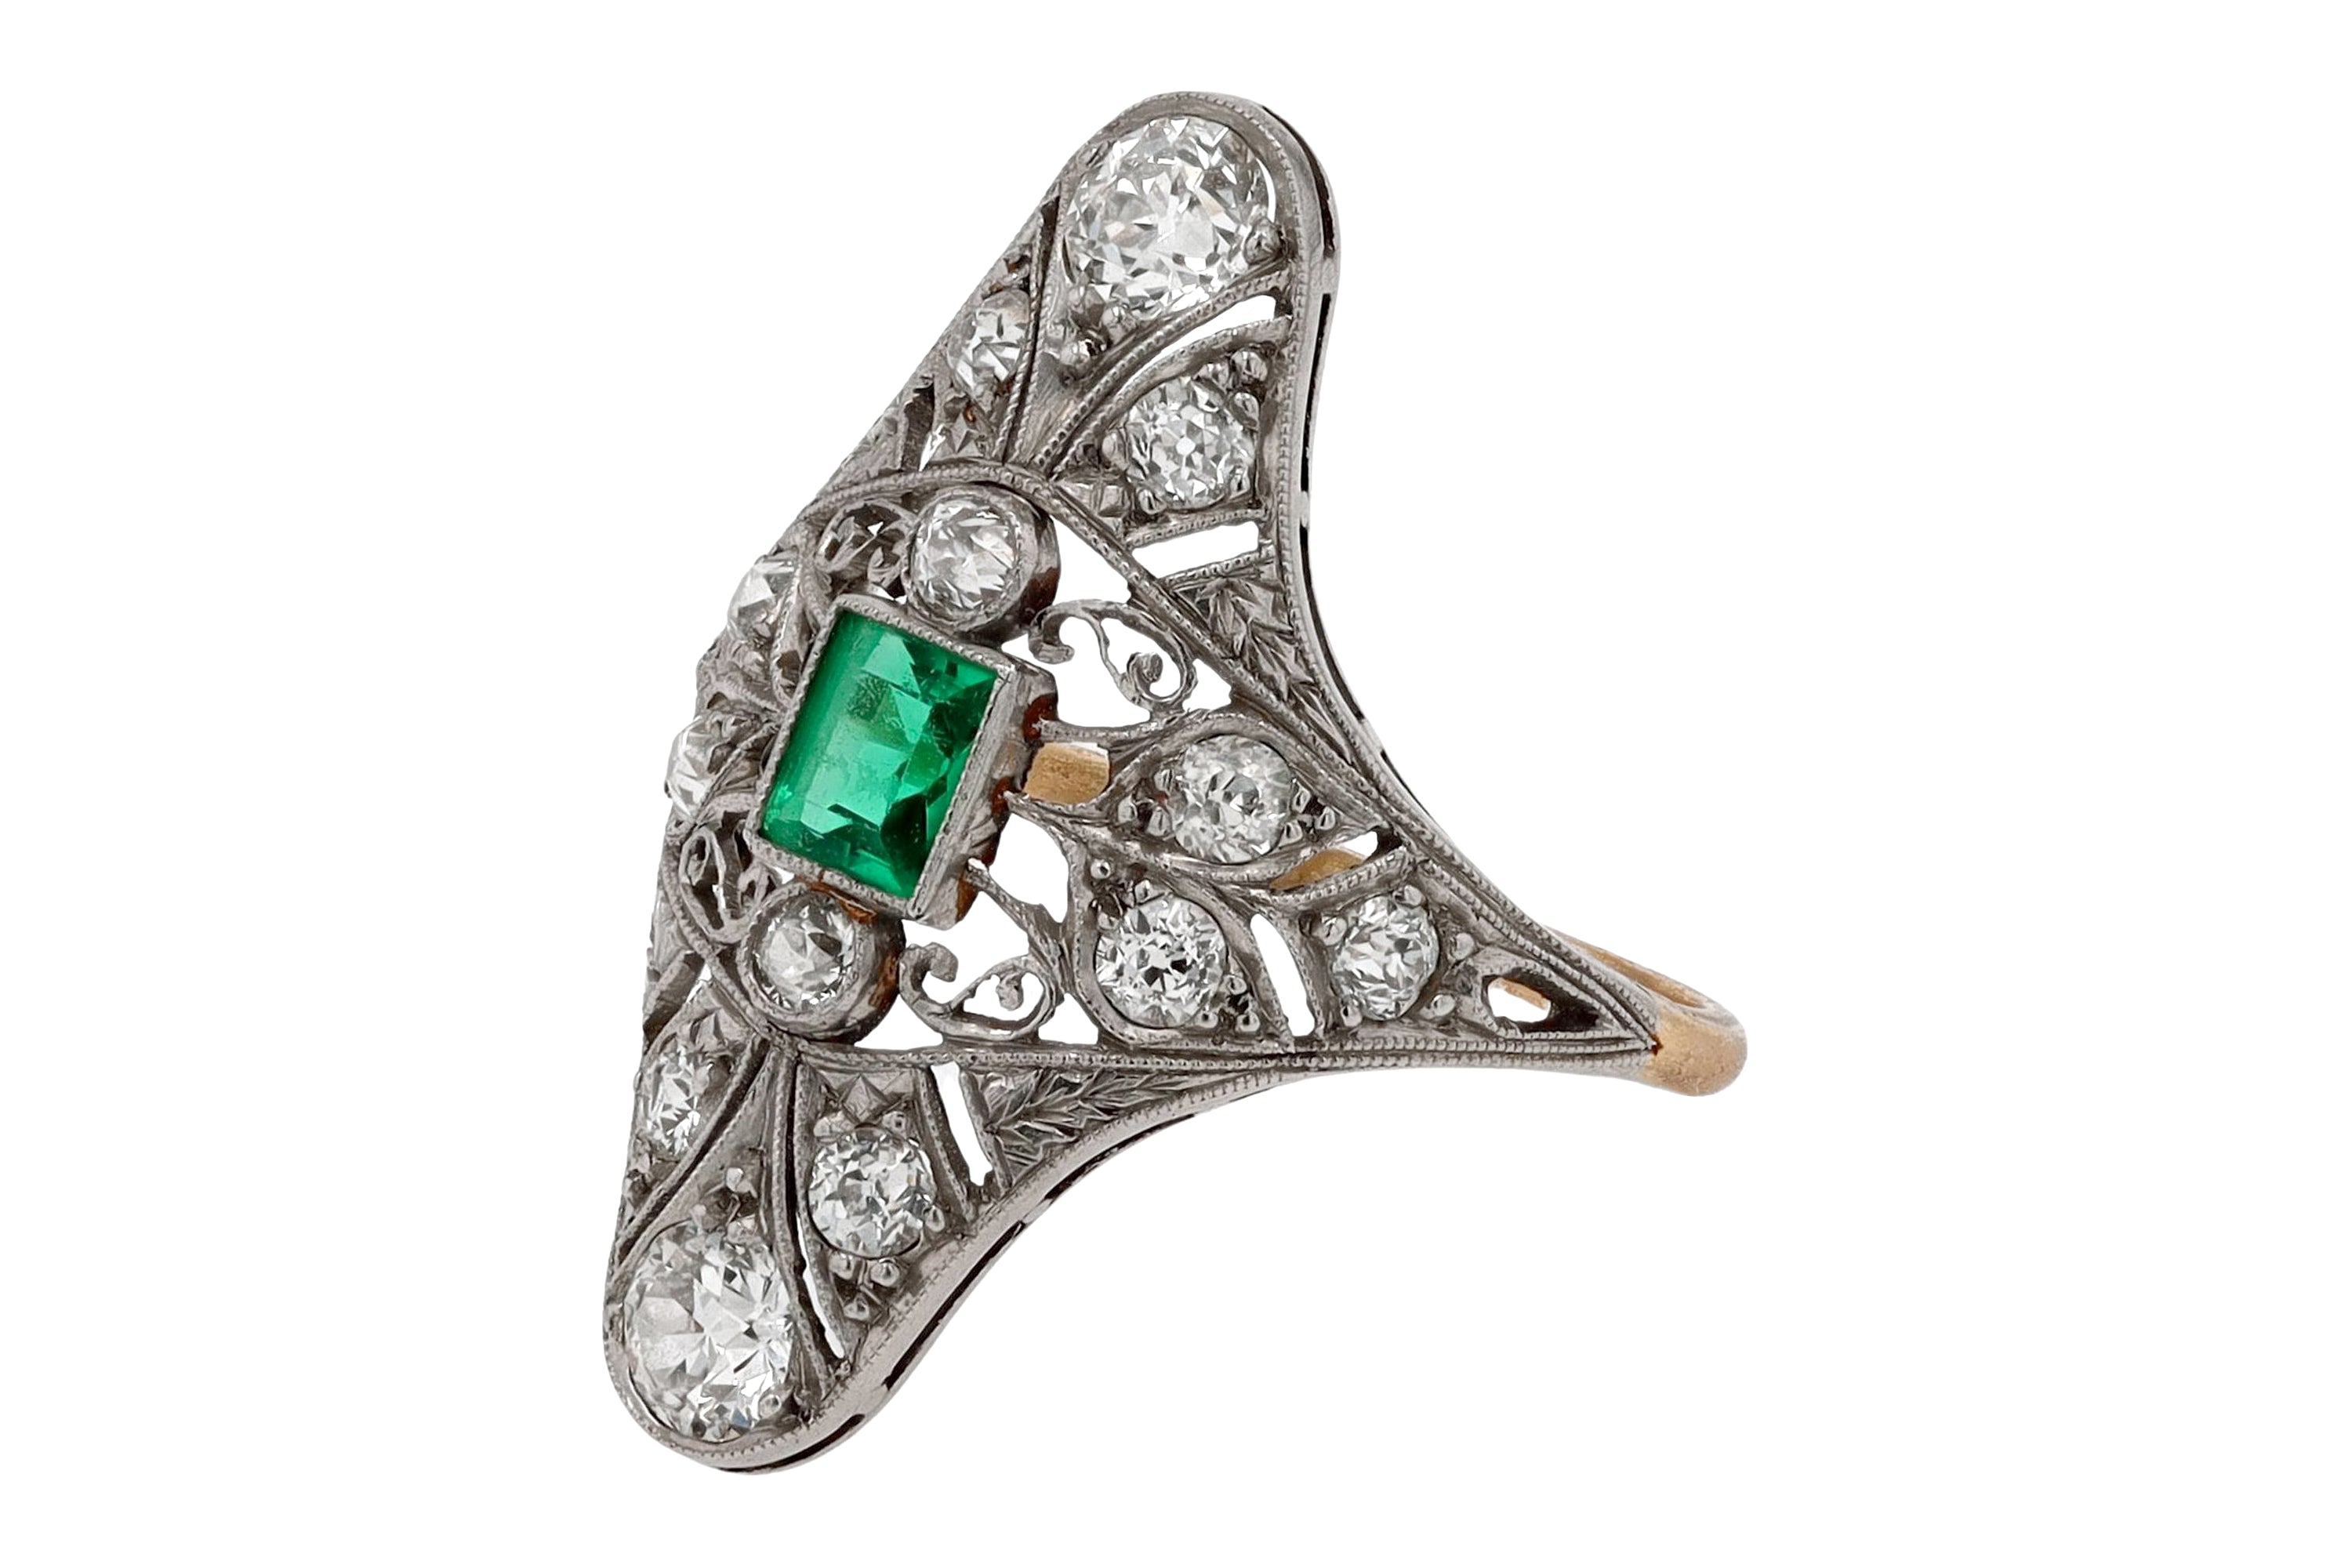 Antique Edwardian Filigree Emerald and Diamond Dinner Ring